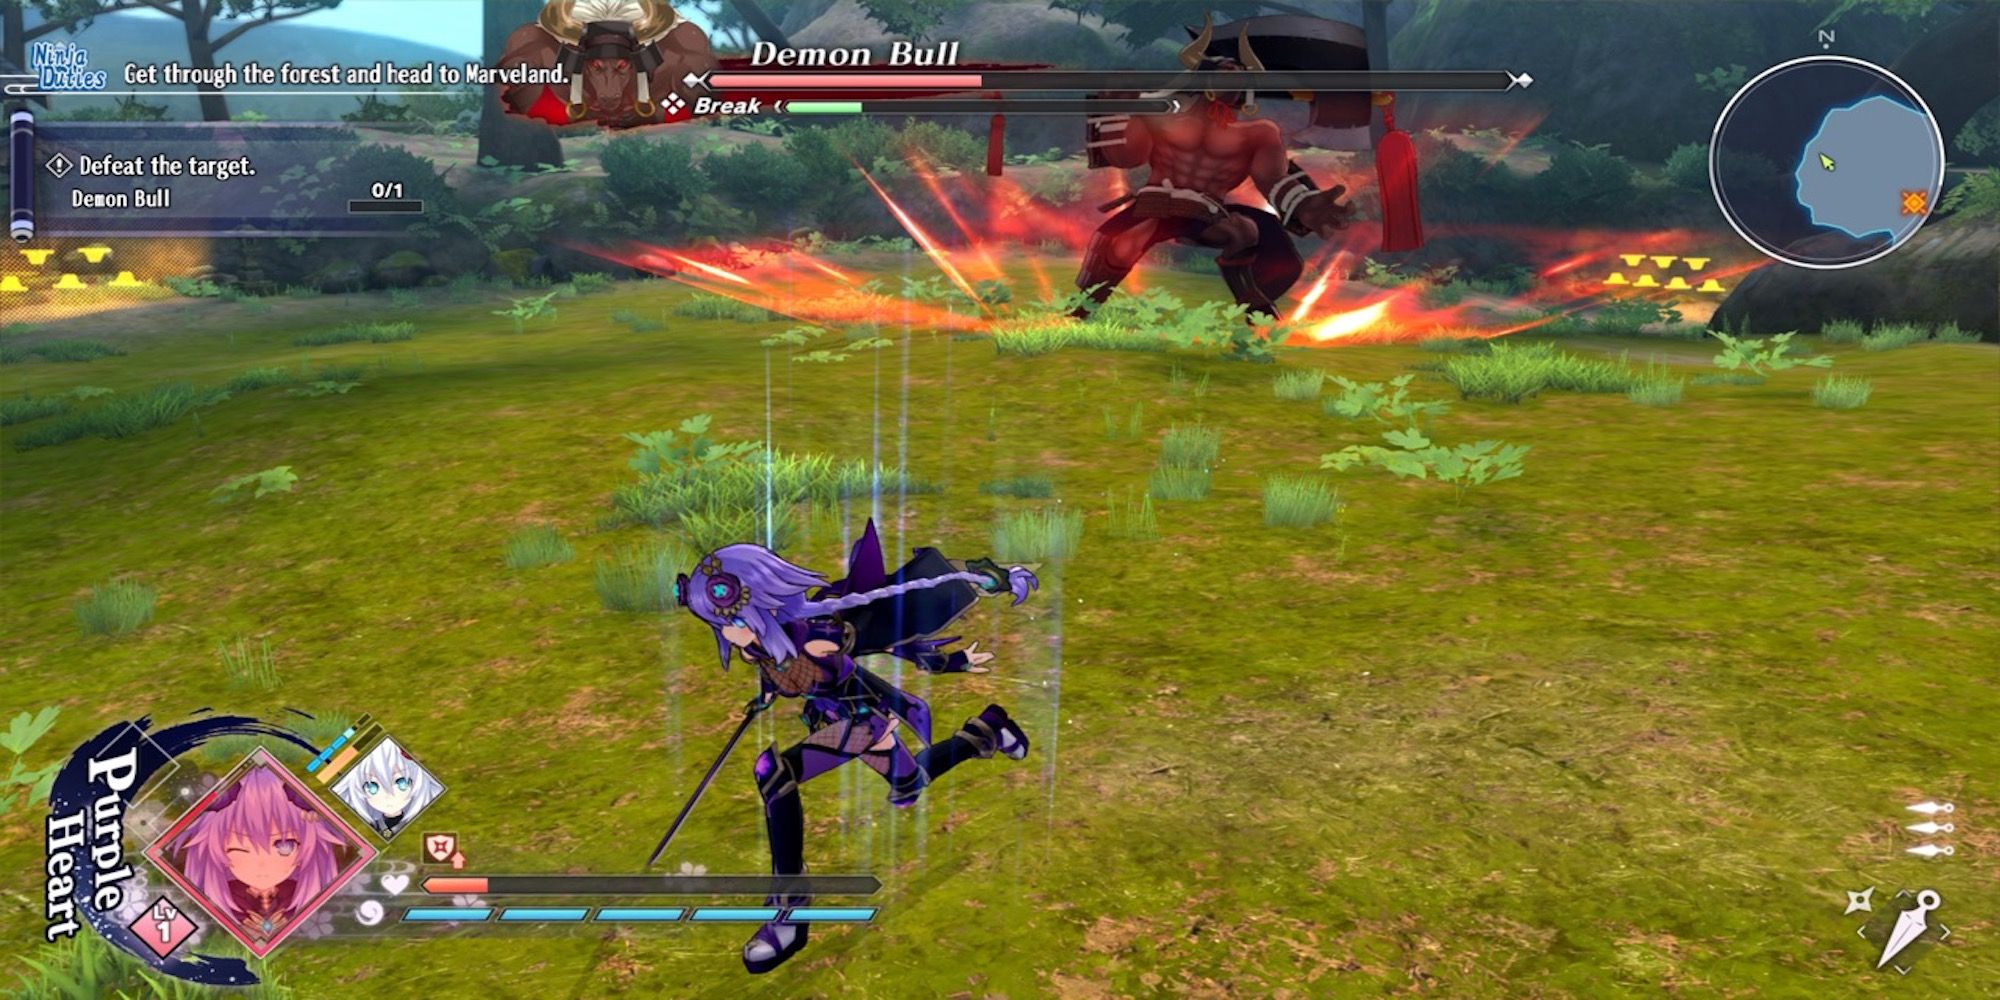 Fighting enemies in Neptunia x Senran Kagura: Ninja Wars